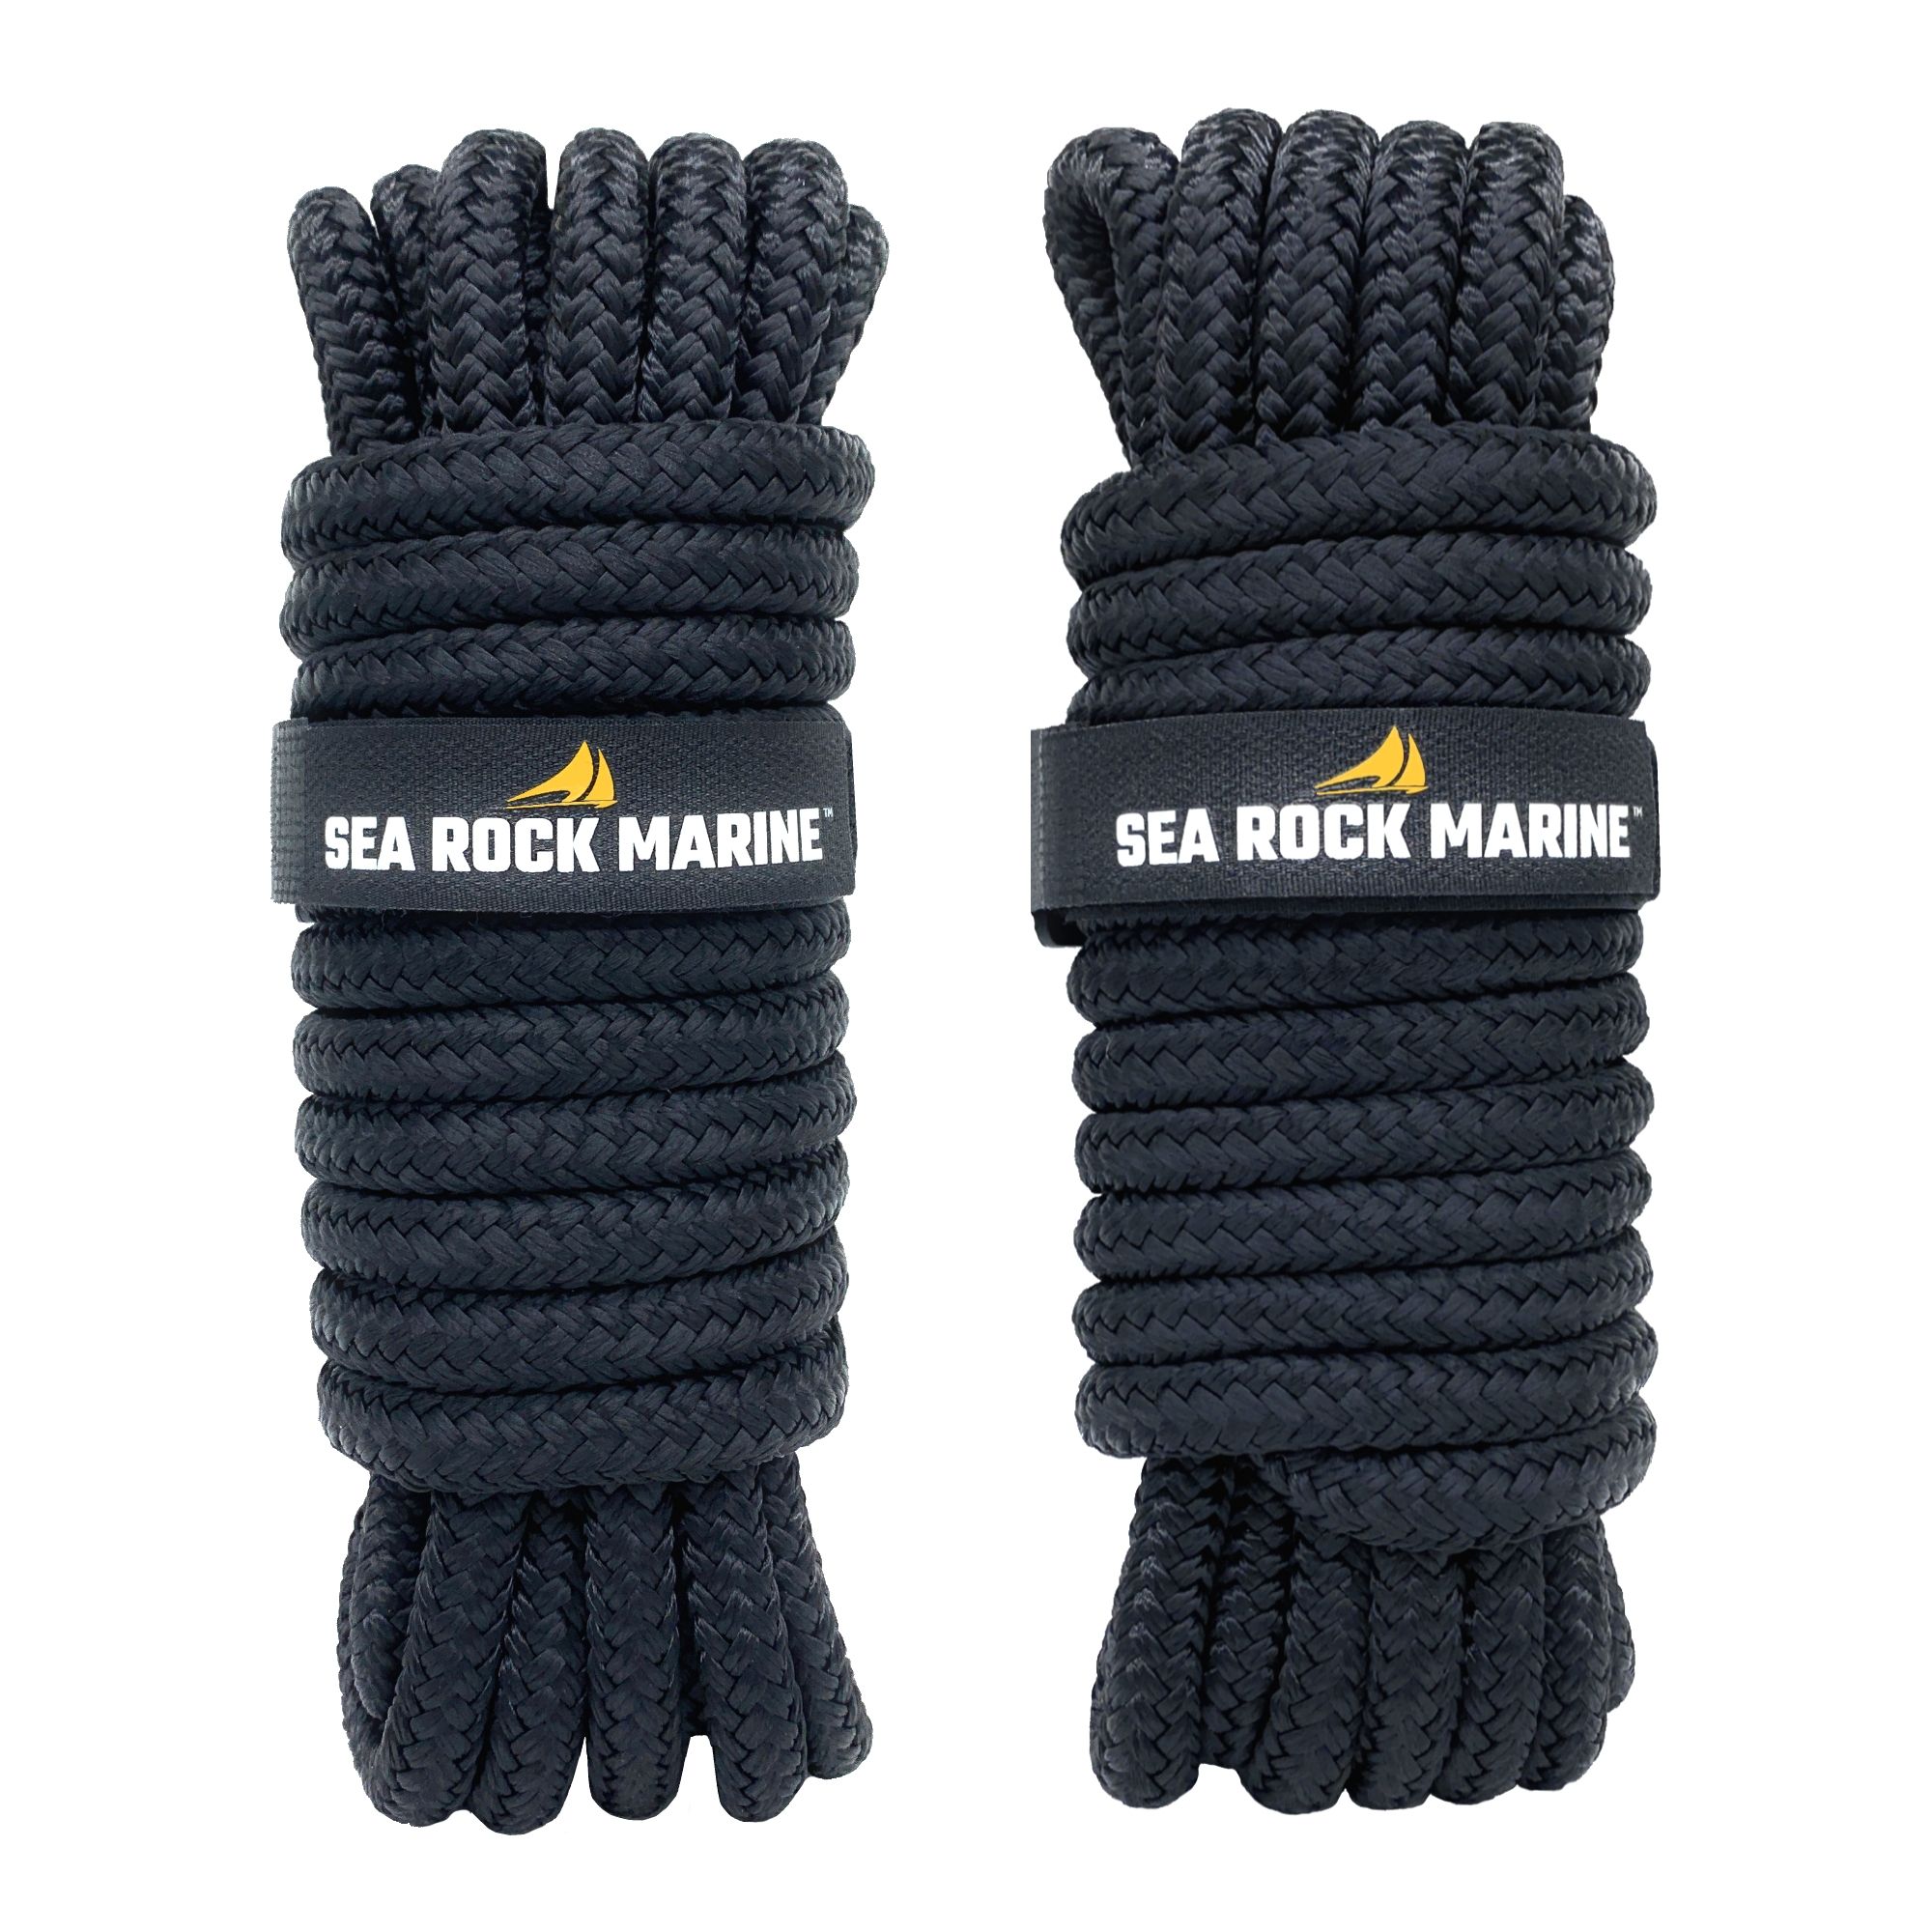 Sea Rock Marine Premium Double Braid Nylon Dock Line - 3/8” x 15' (10mm x  4.6m), Black, set of 2